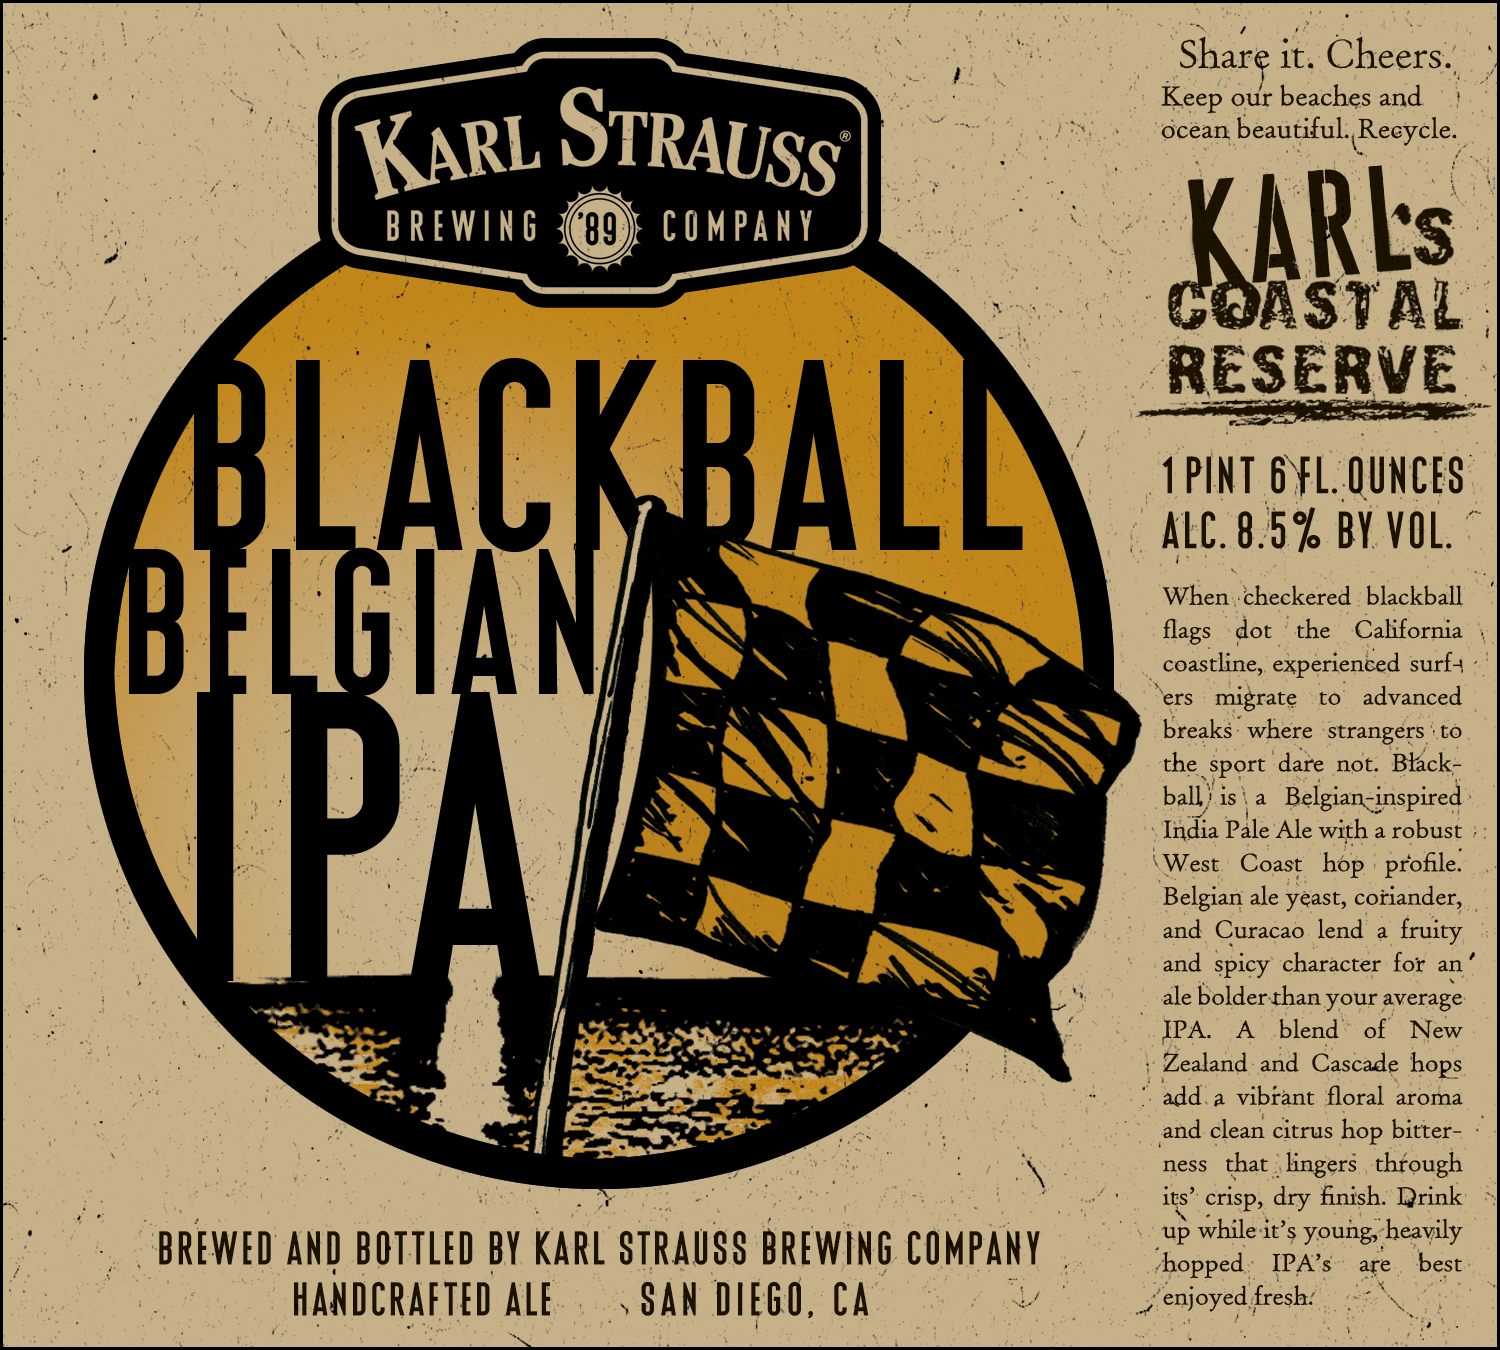 Karl Strauss Blackball Belgian IPA